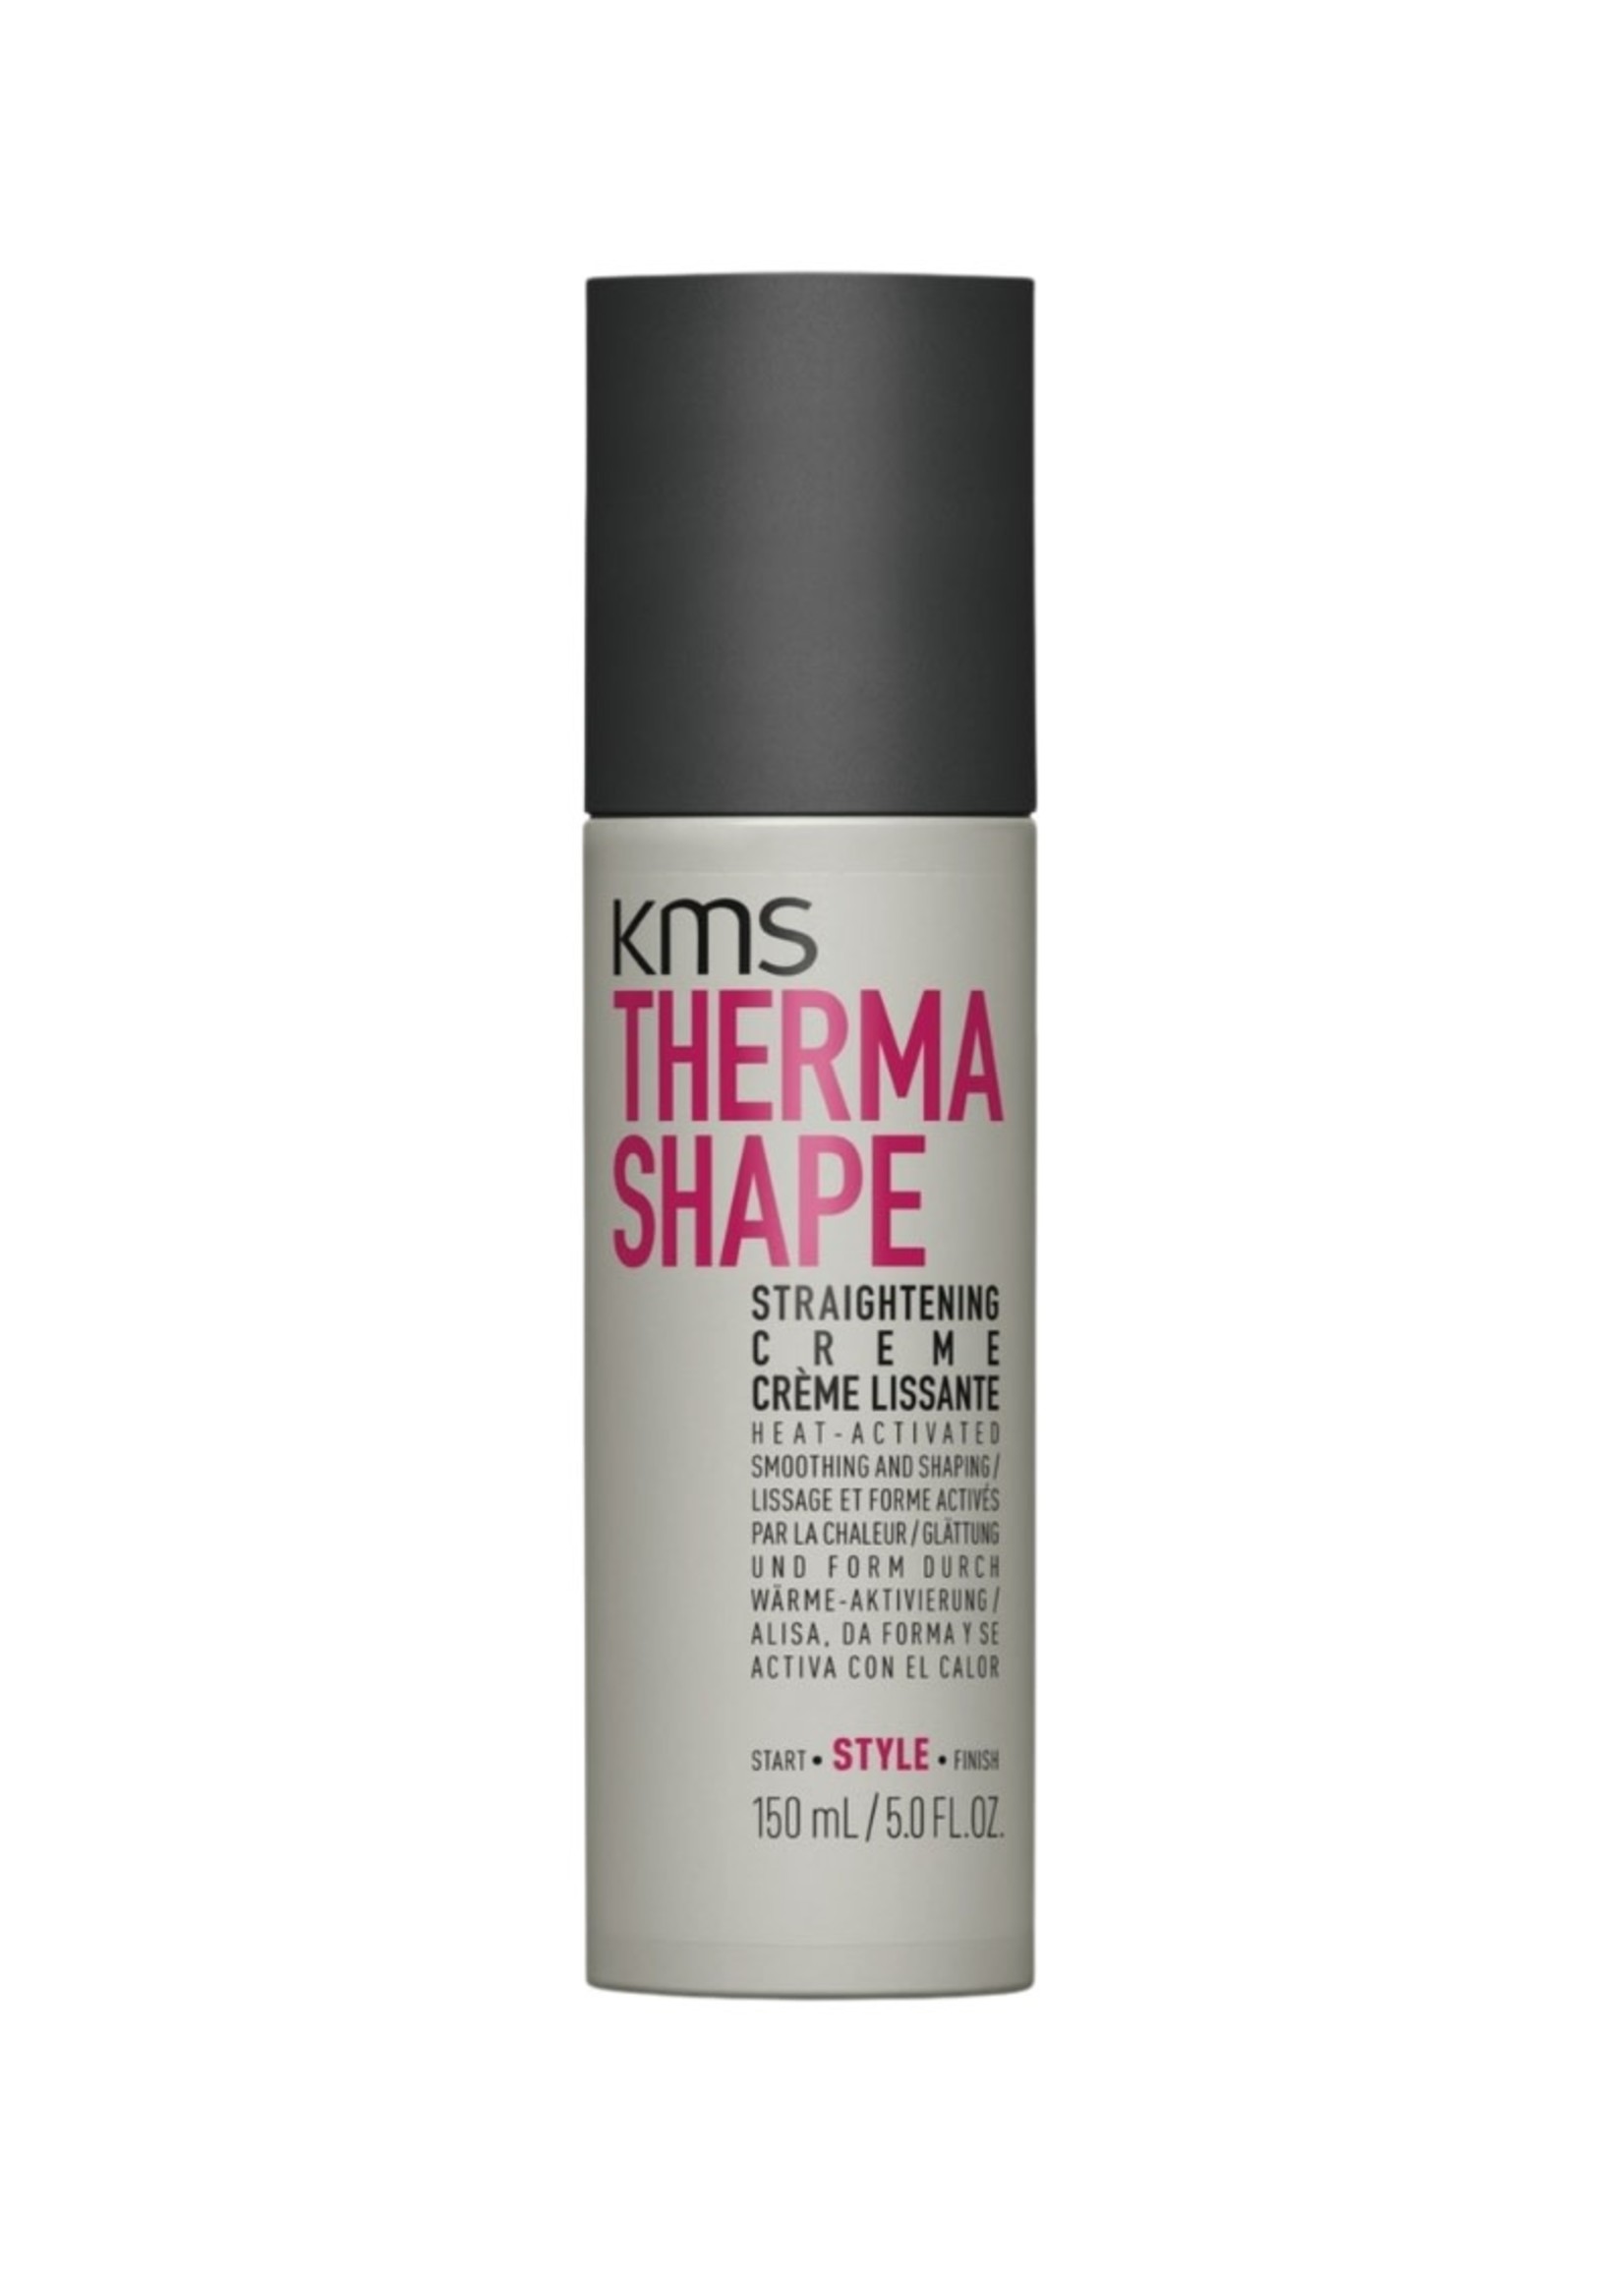 KMS KMS Thermashape Straightening Creme 150ml